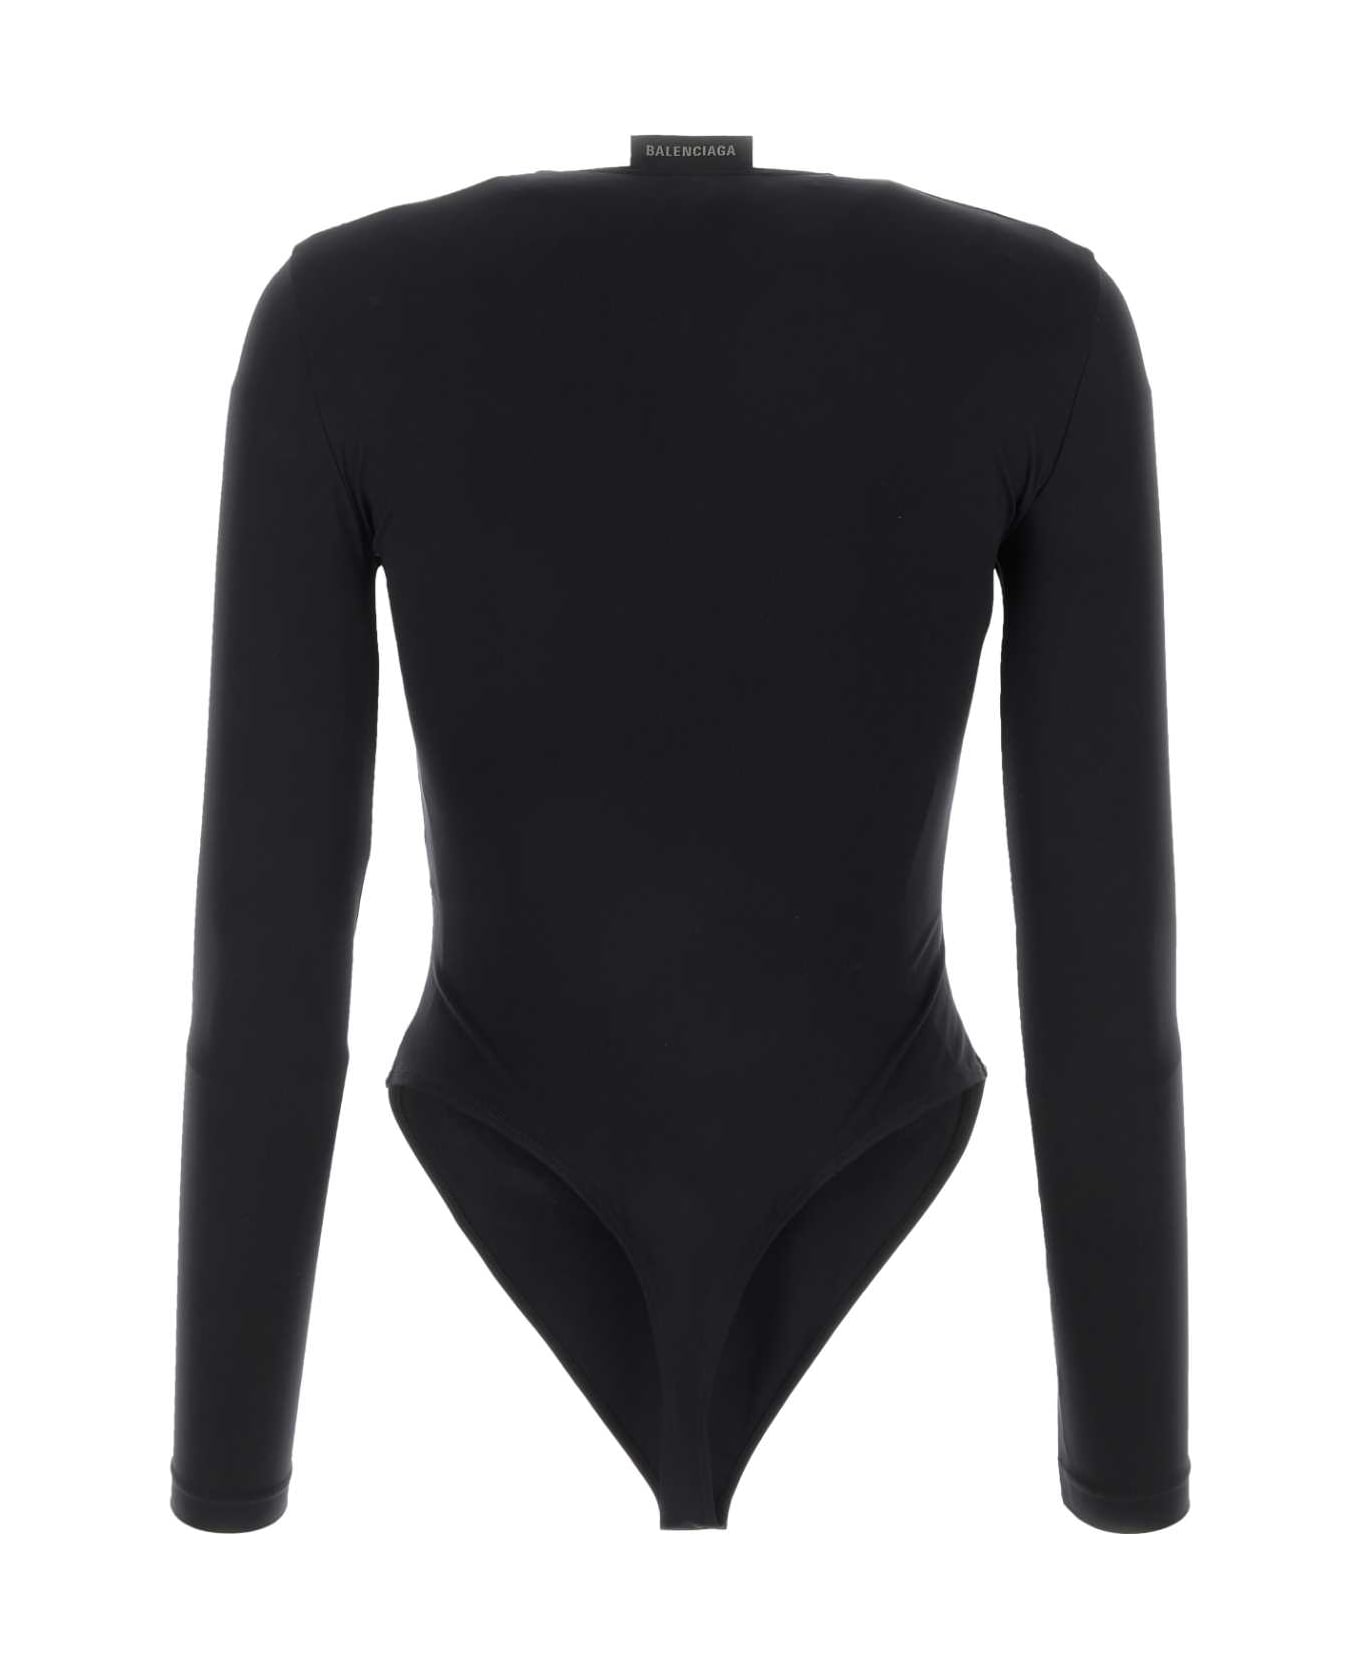 Balenciaga Black Jersey Outside Loop Bodysuit - 1000 ボディスーツ